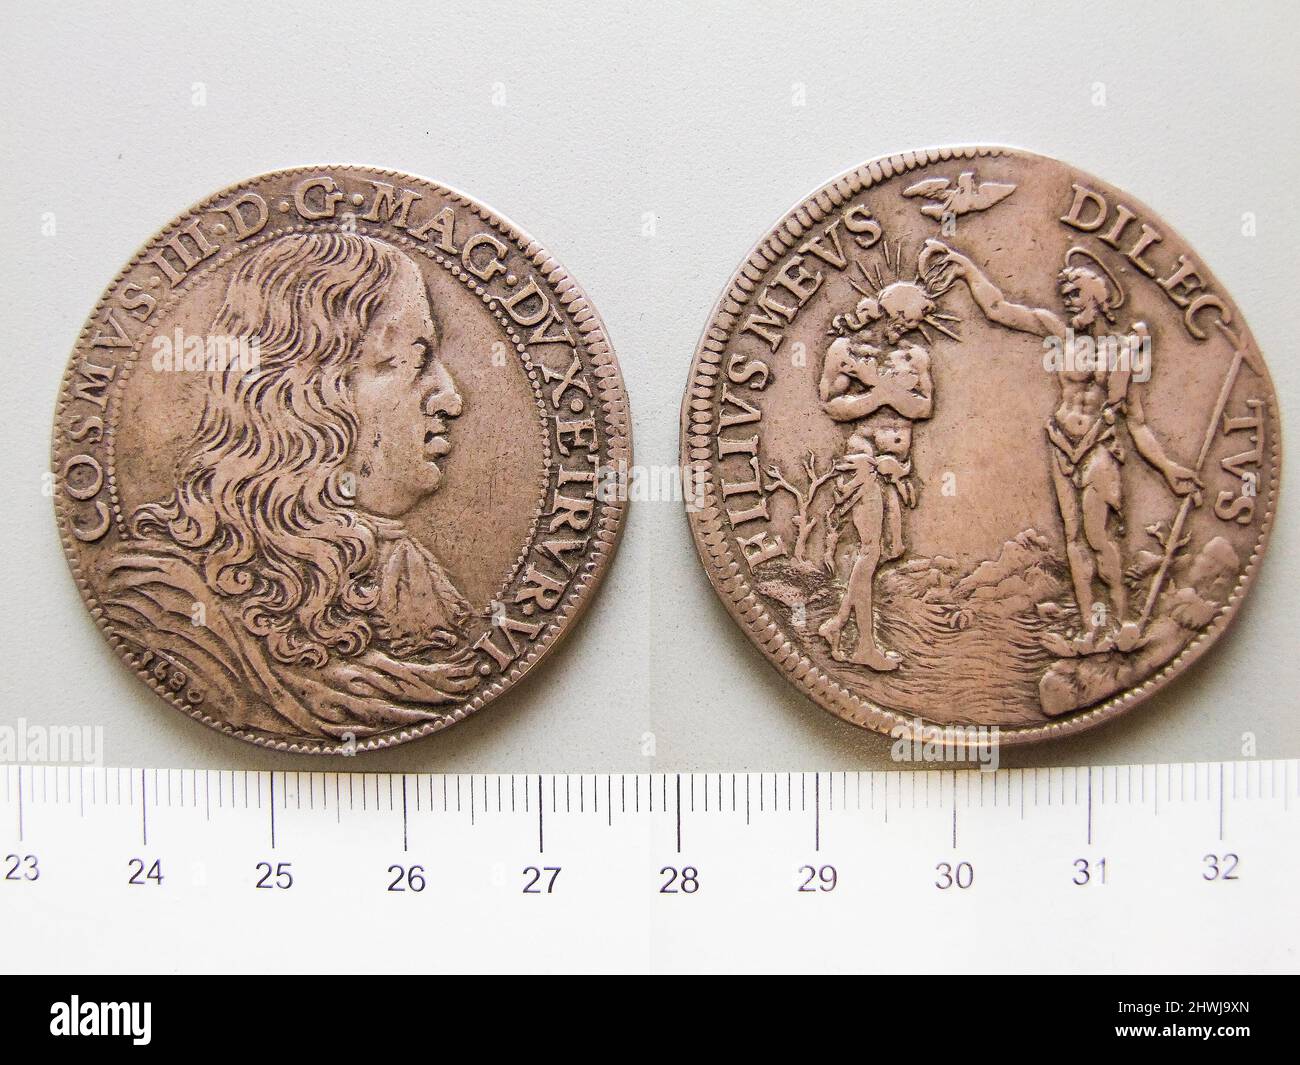 1 Piastra de Florence avec Cosimo de’ Medici III Objet: Cosimo de’ Medici III, Italien, 1642–1723 monnaie: Florence Banque D'Images